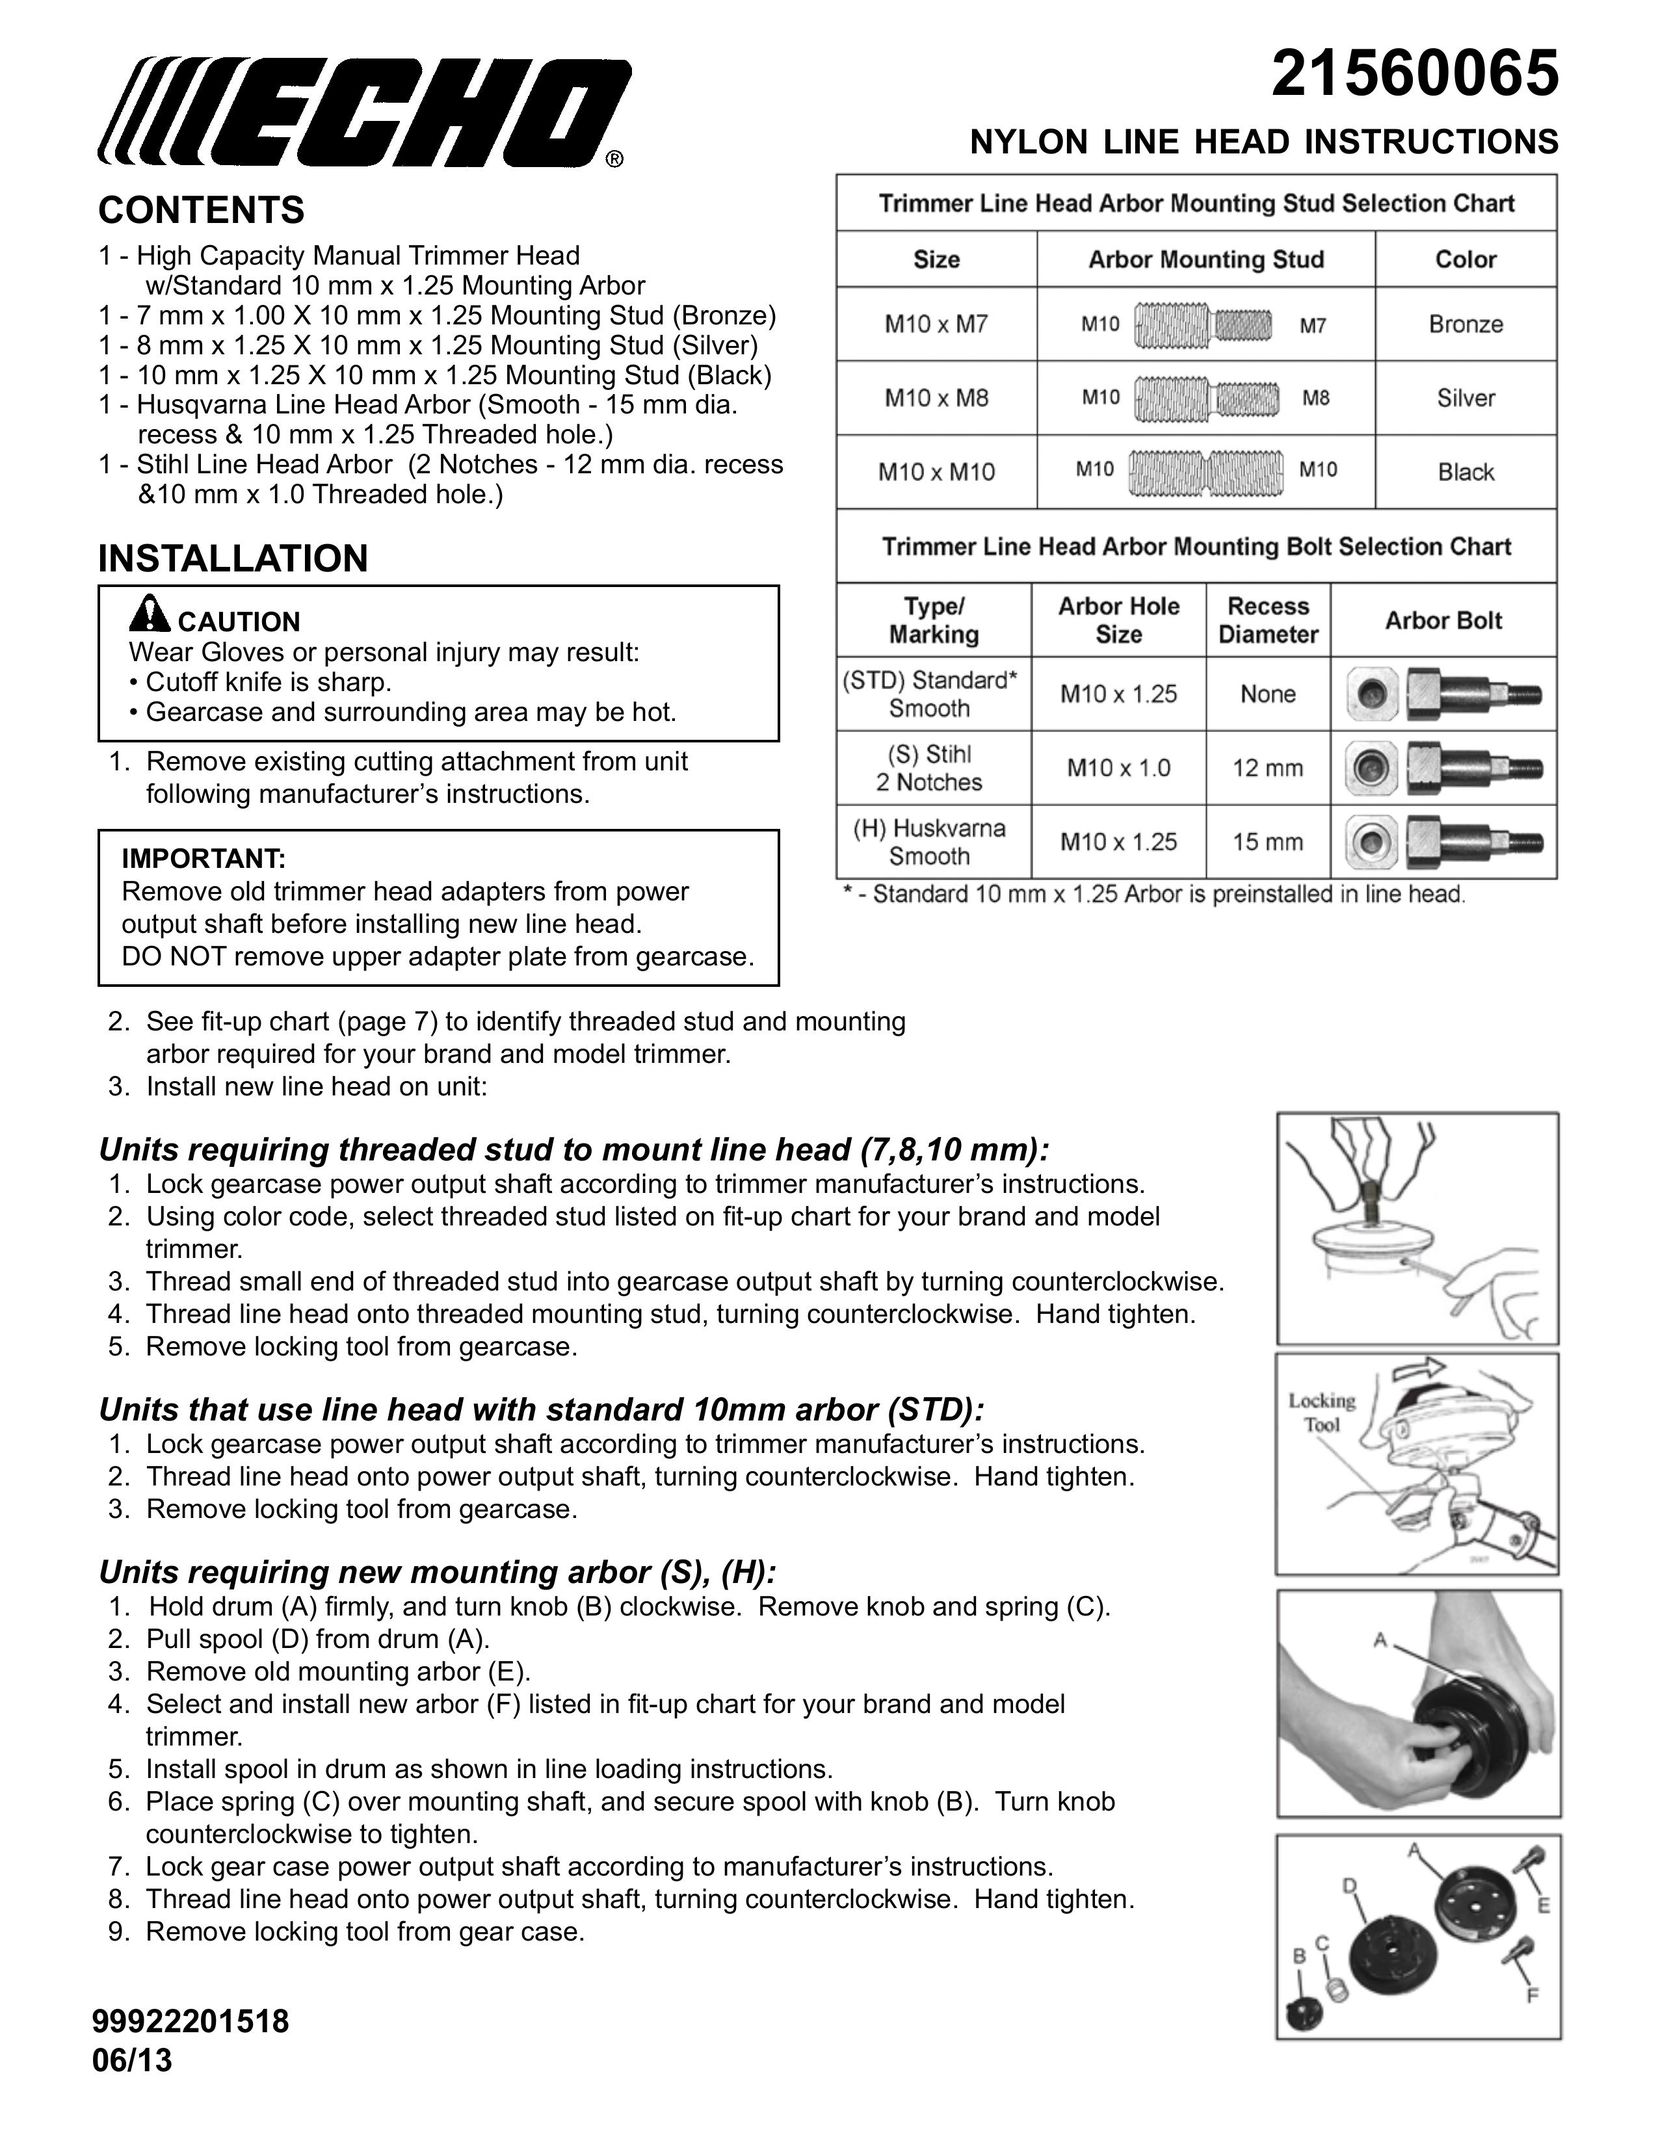 Echo 21560065 Laminate Trimmer User Manual